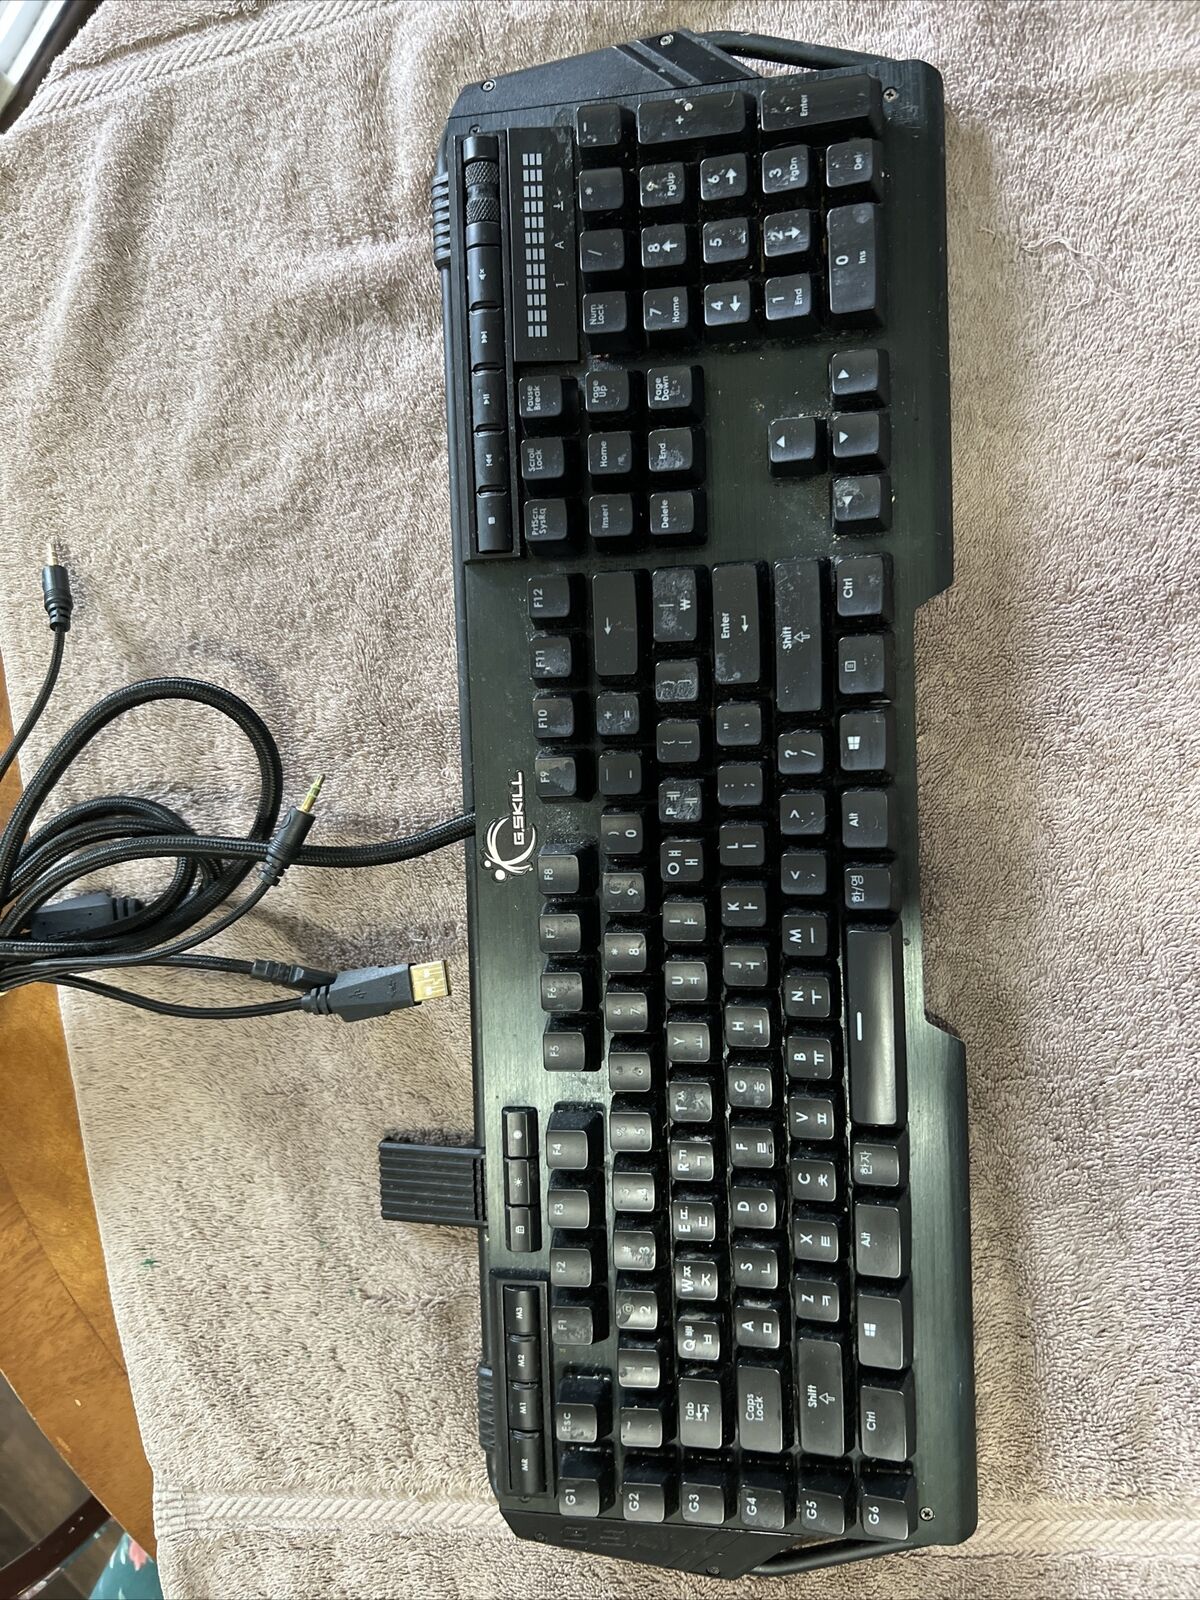 G Skill  RipJaws KM780 RGB Mechanical Gaming Keyboard